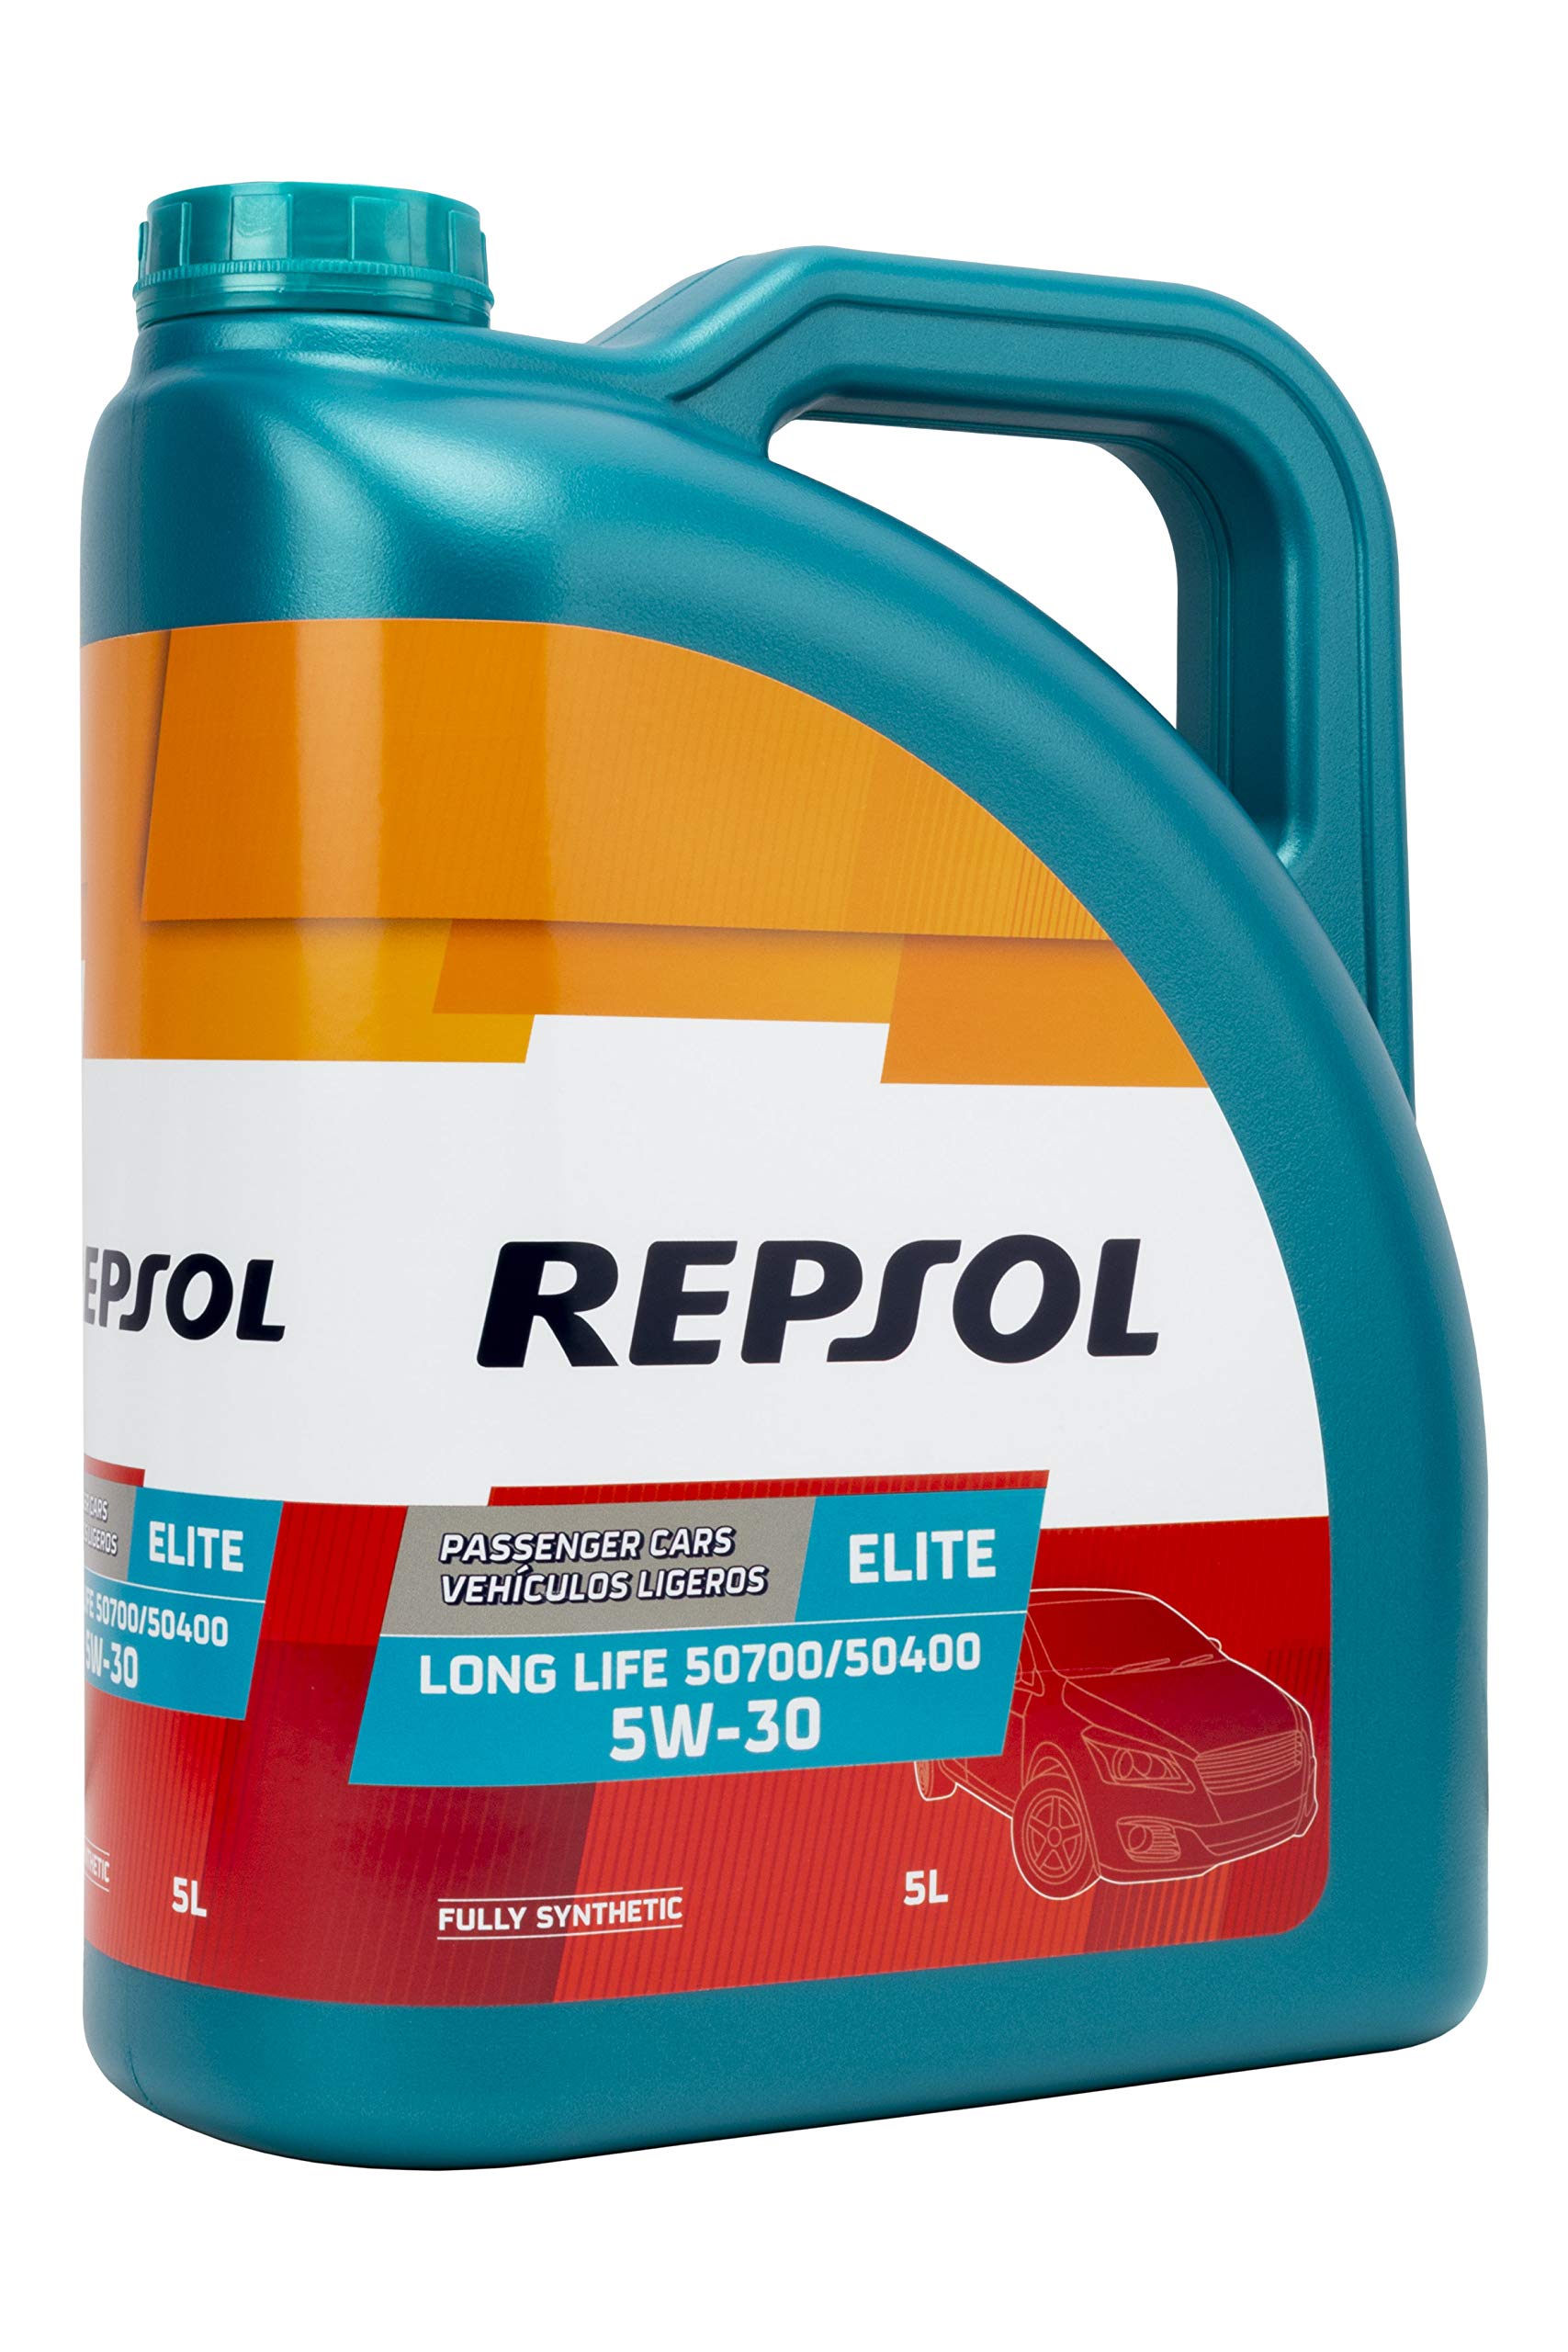 Repsol 543050 Motoröle Elite Long Life 5W30 5 Lt, mehrfarbig, 5L von Repsol